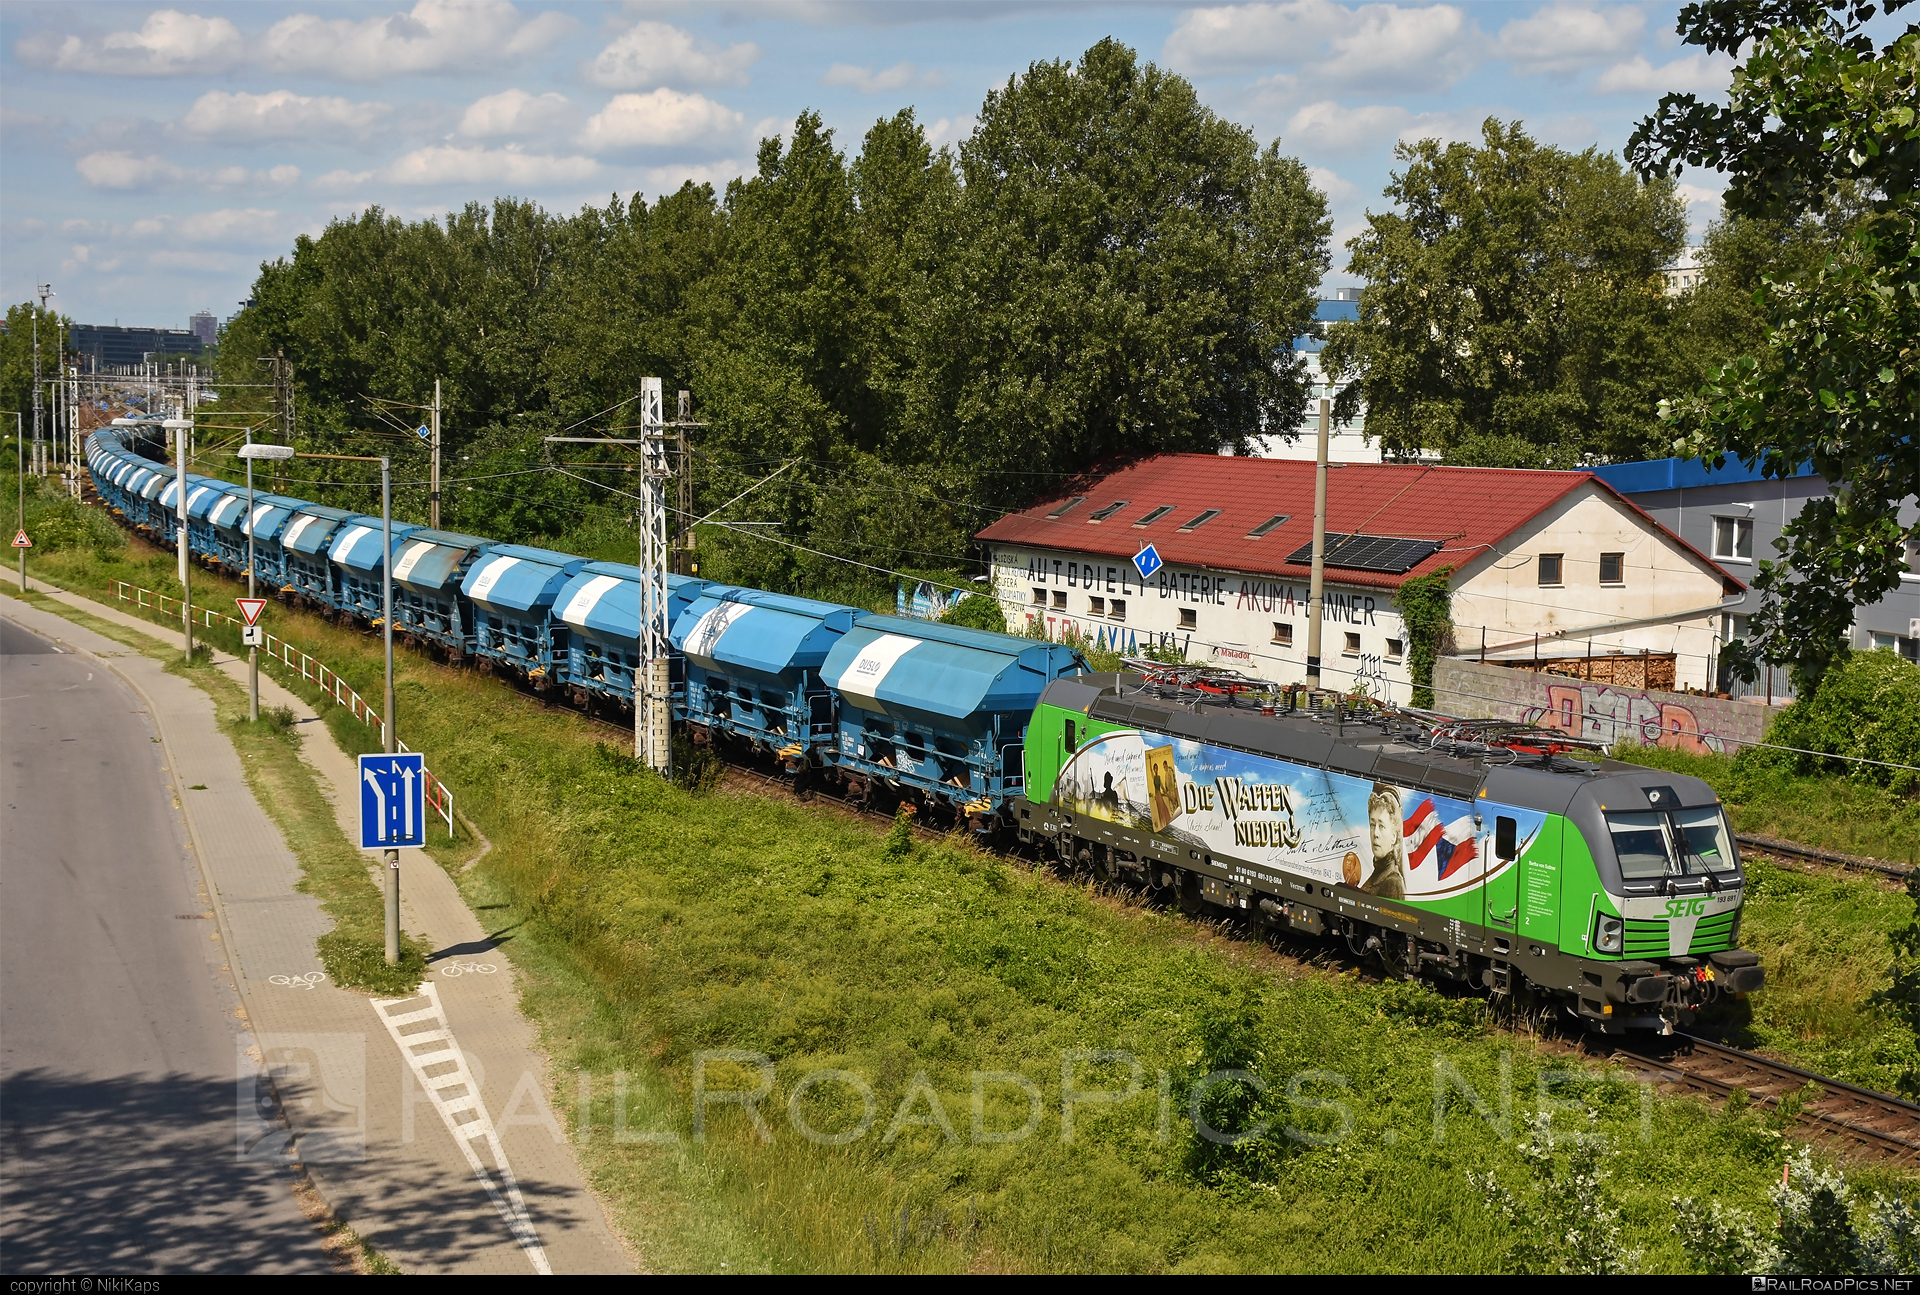 Siemens Vectron MS - 193 691 operated by Salzburger Eisenbahn Transportlogistik GmbH #SalzburgerEisenbahnTransportlogistik #SalzburgerEisenbahnTransportlogistikGmbH #duslo #hopperwagon #s-rail #sRailGmbH #setg #siemens #siemensVectron #siemensVectronMS #vectron #vectronMS